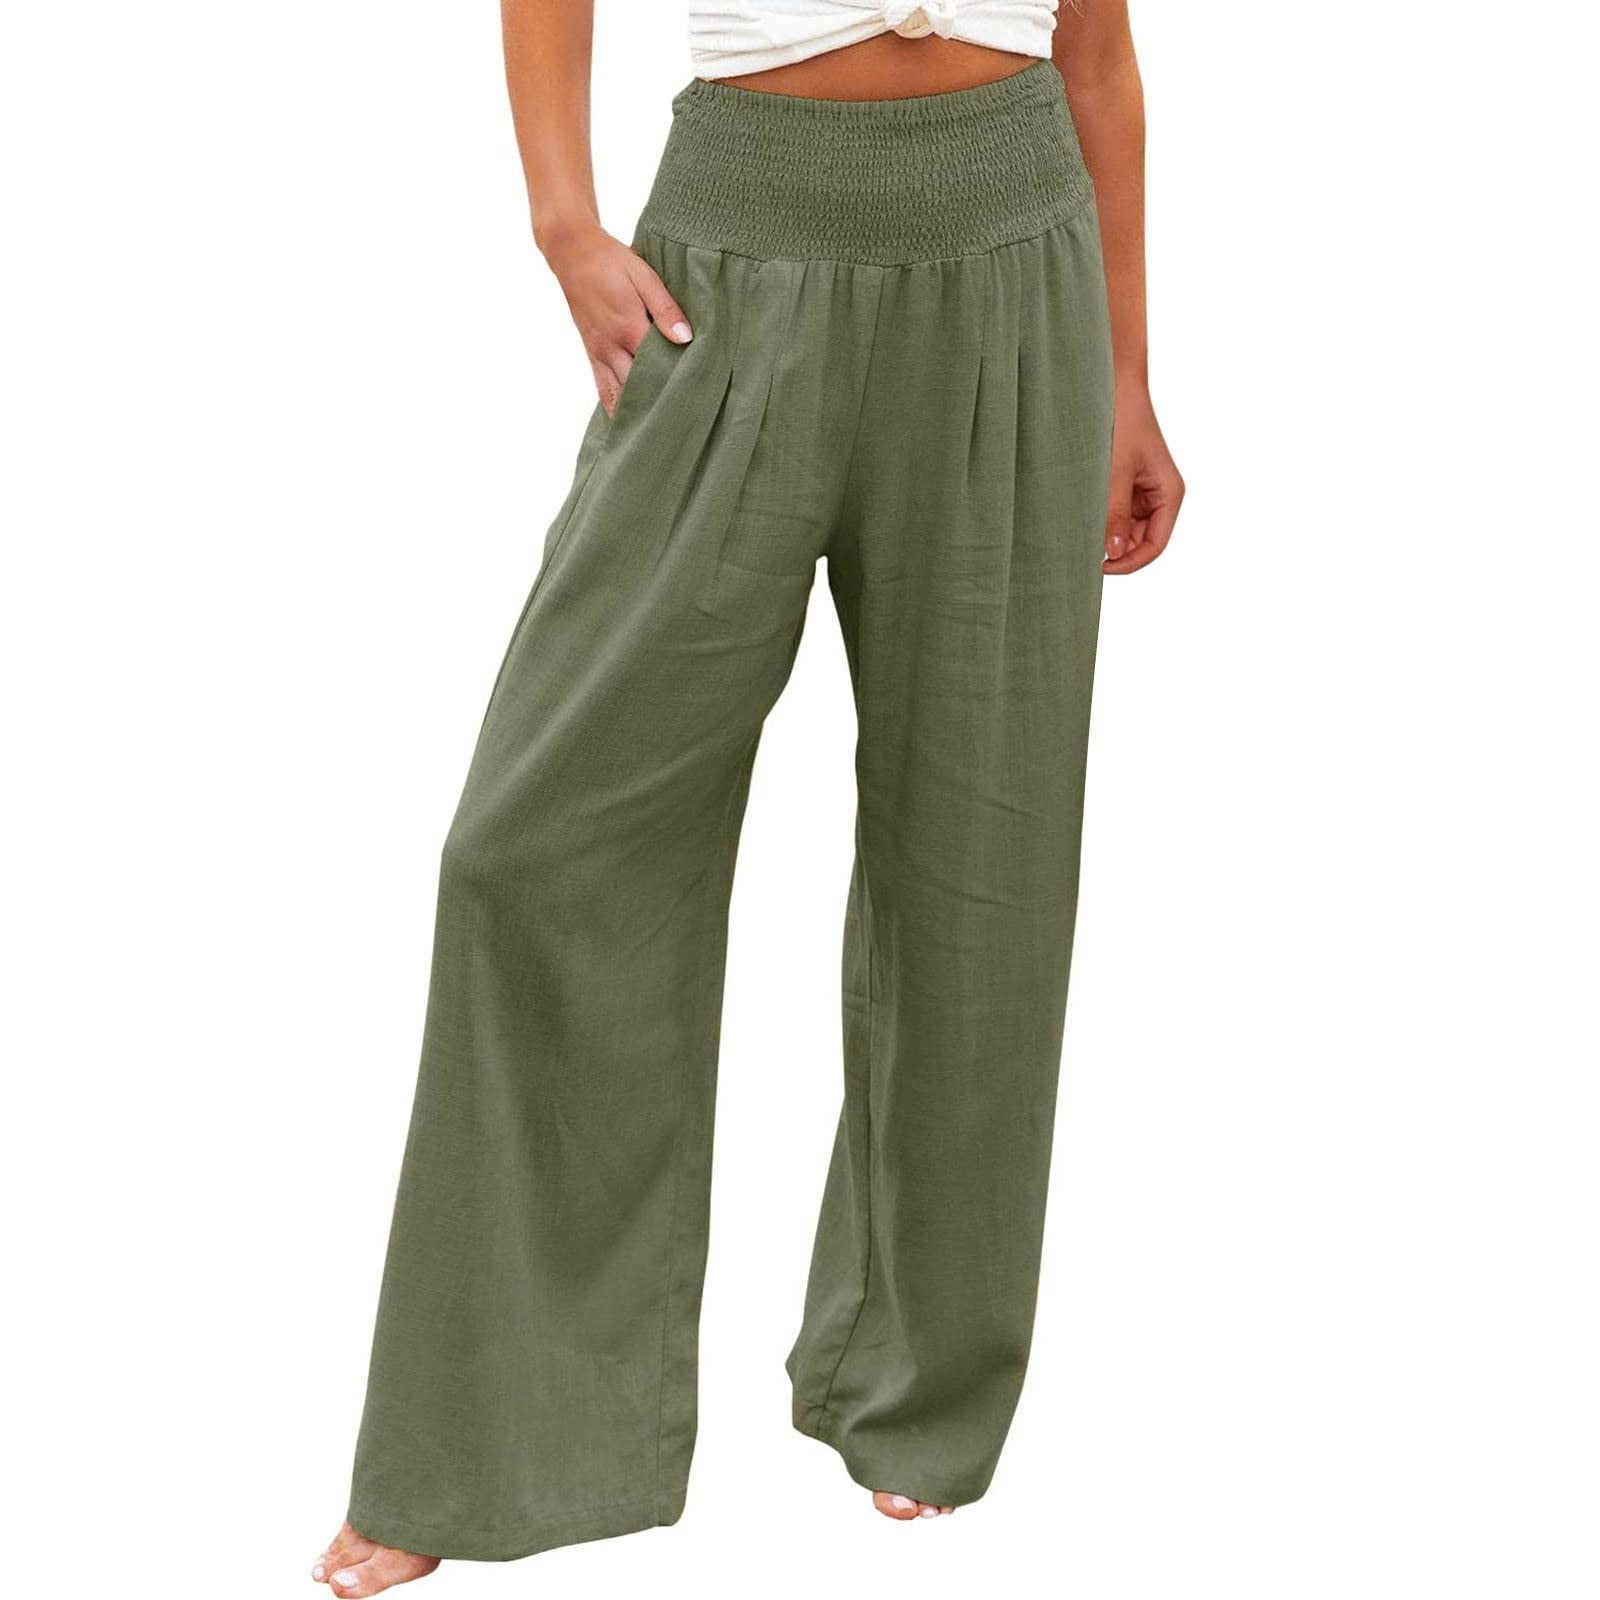 MILLIONSTORE Cotton Loose Fit Casual Lightweight Elastic Waist Summer Pants   Joggers Grey